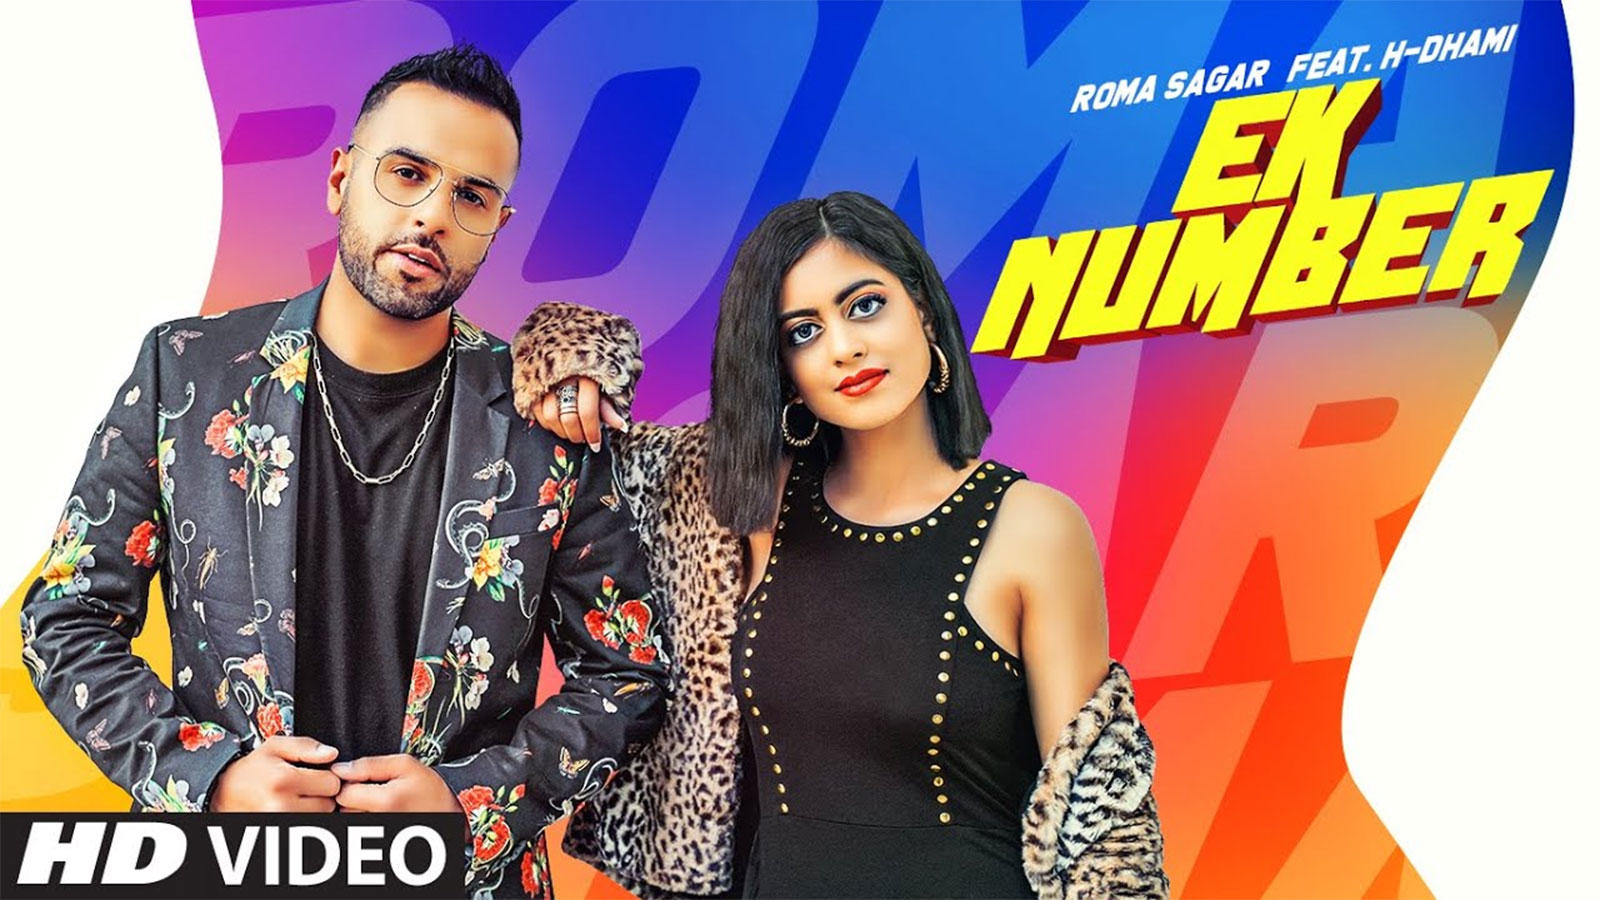 Latest Punjabi Song 'Ek Number' Sung By Roma Sagar And H Dhami | Punjabi  Video Songs - Times of India